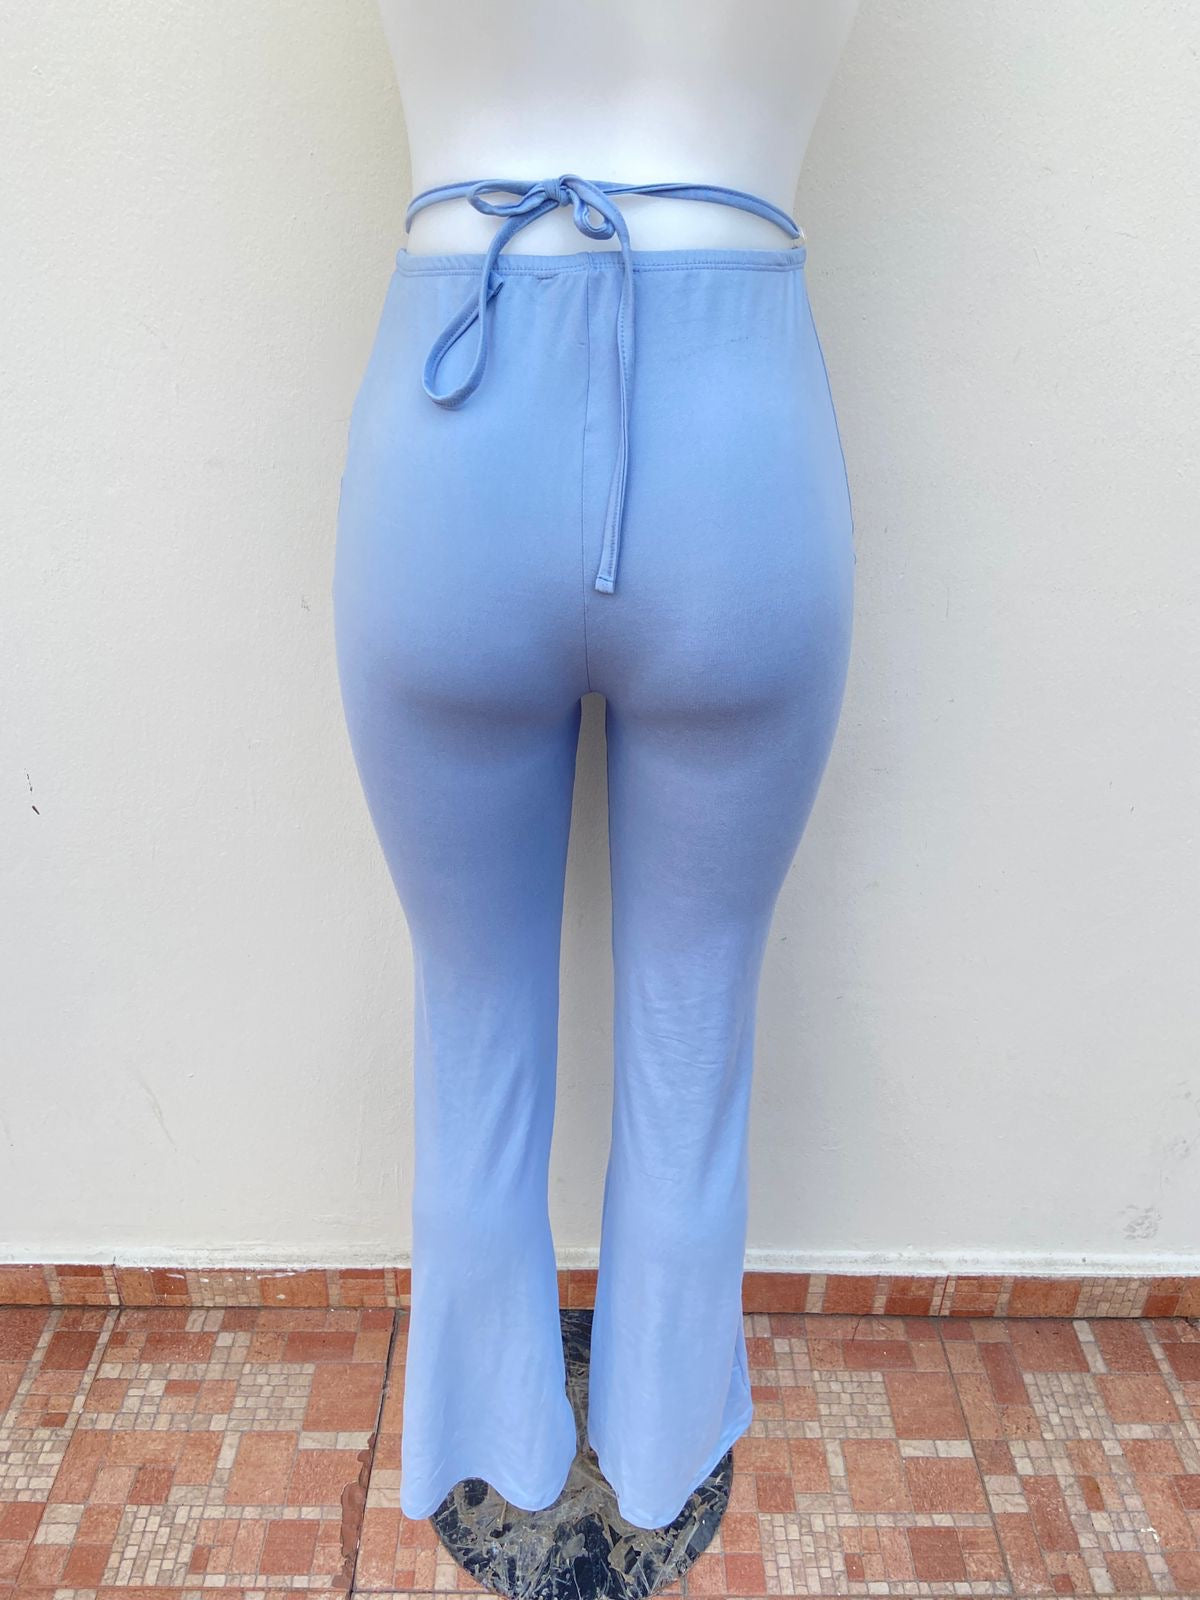 Pantalon Haute Monde Original, en color azul claro tiros ajustables delantero.